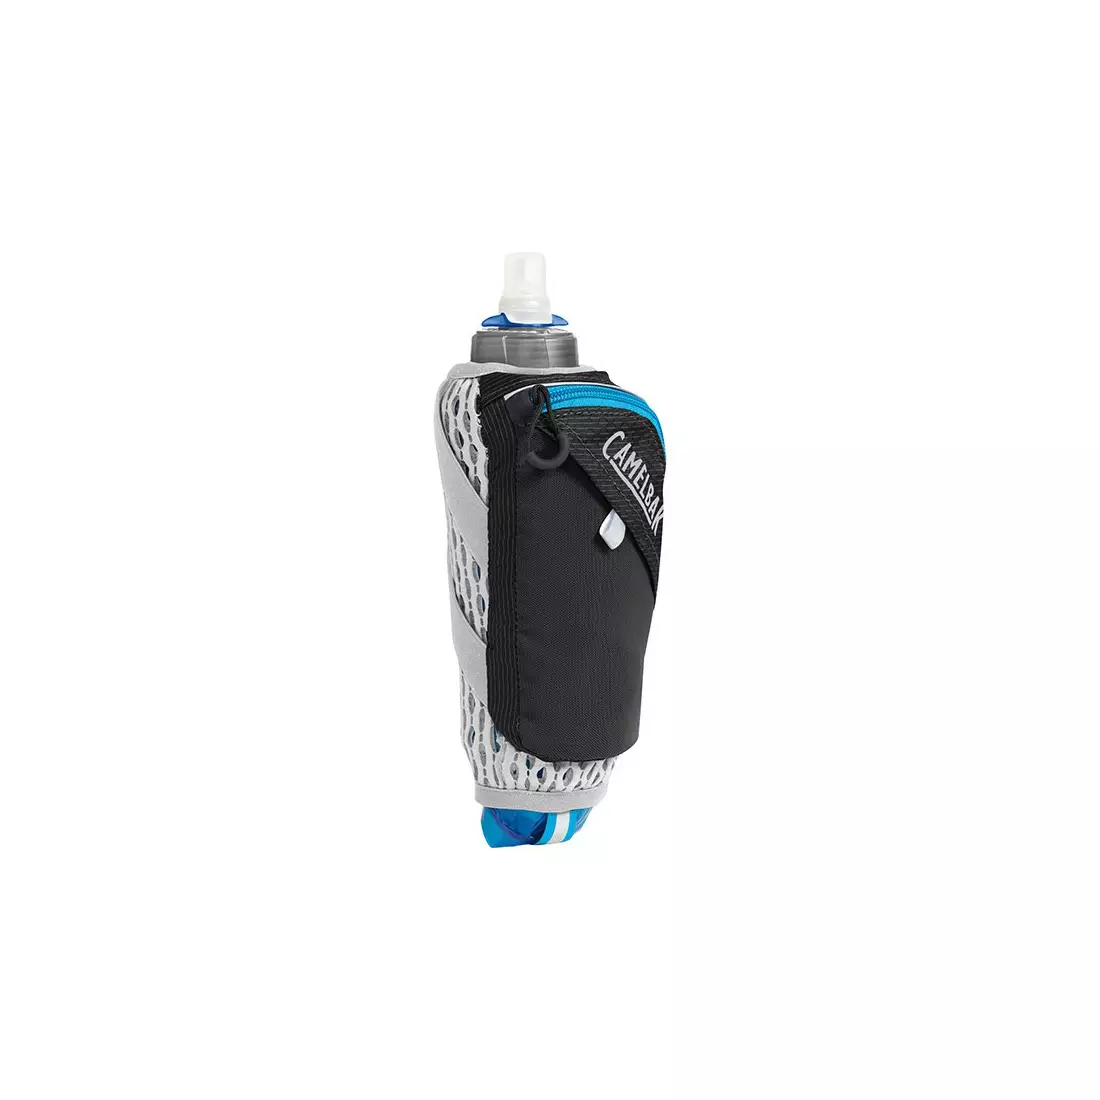 Camelbak termálvizes palack futó fogantyúval Ultra Handheld Chill 0.5L Quick Stow Flask Black/Atomic Blue